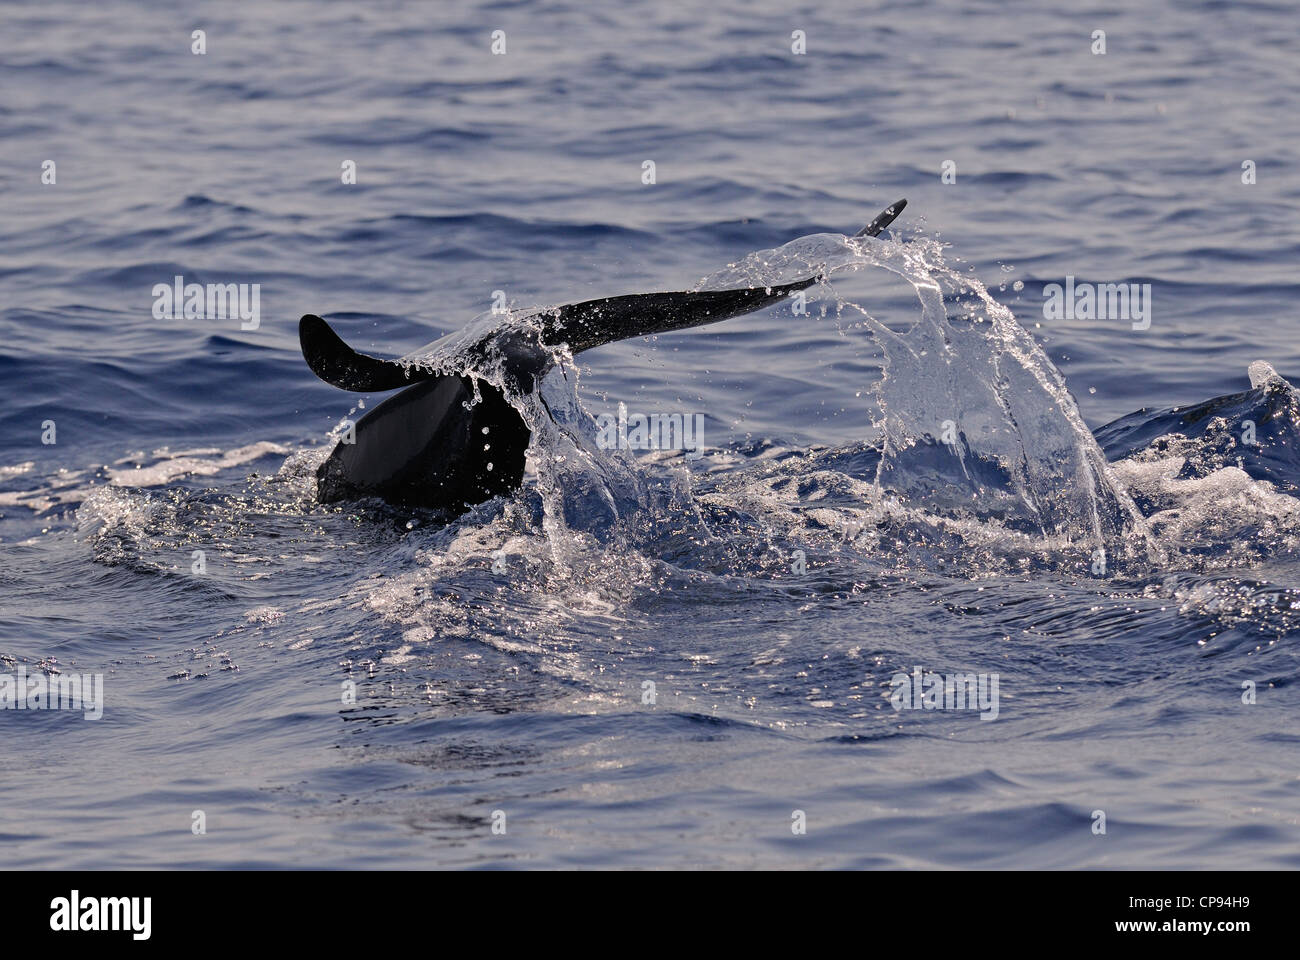 Kurz-finned Grindwal (Globicephala Macrorhynchus) Tauchen mit angehobenen Schweif Fluke, Malediven Stockfoto